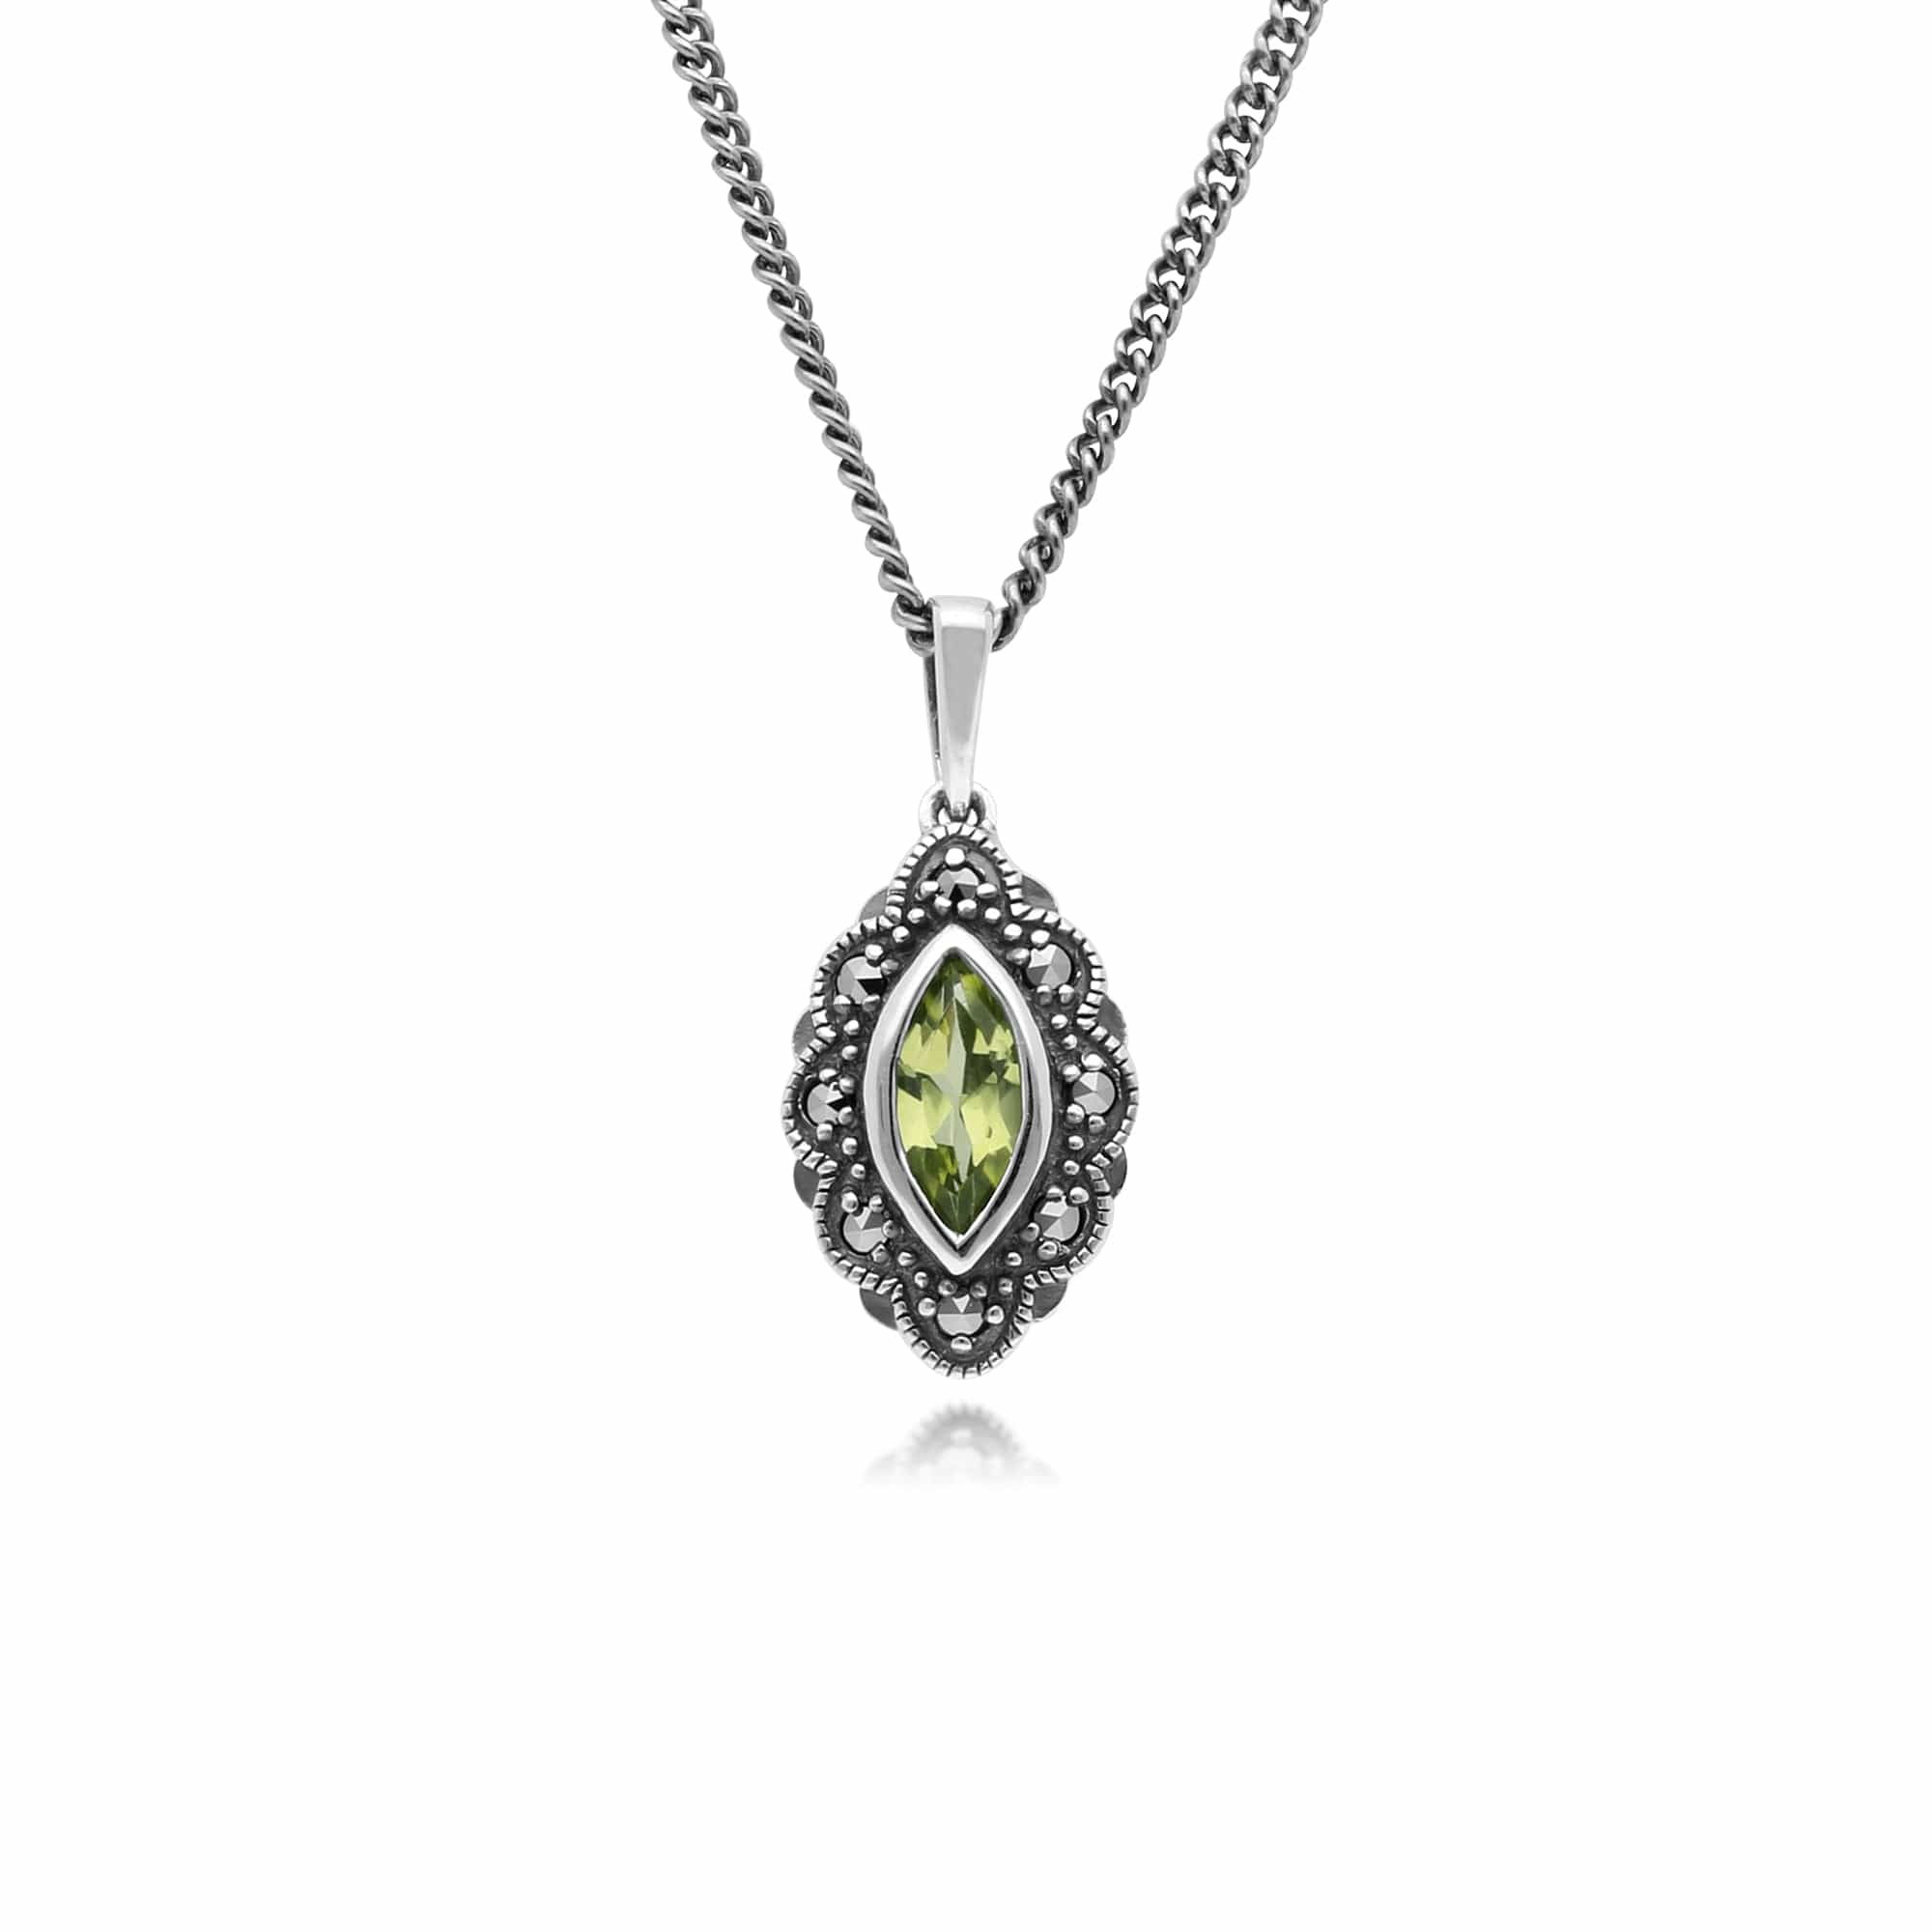 Gemondo Sterling Silver Peridot & Marcasite Art Nouveau 45cm Necklace - Gemondo